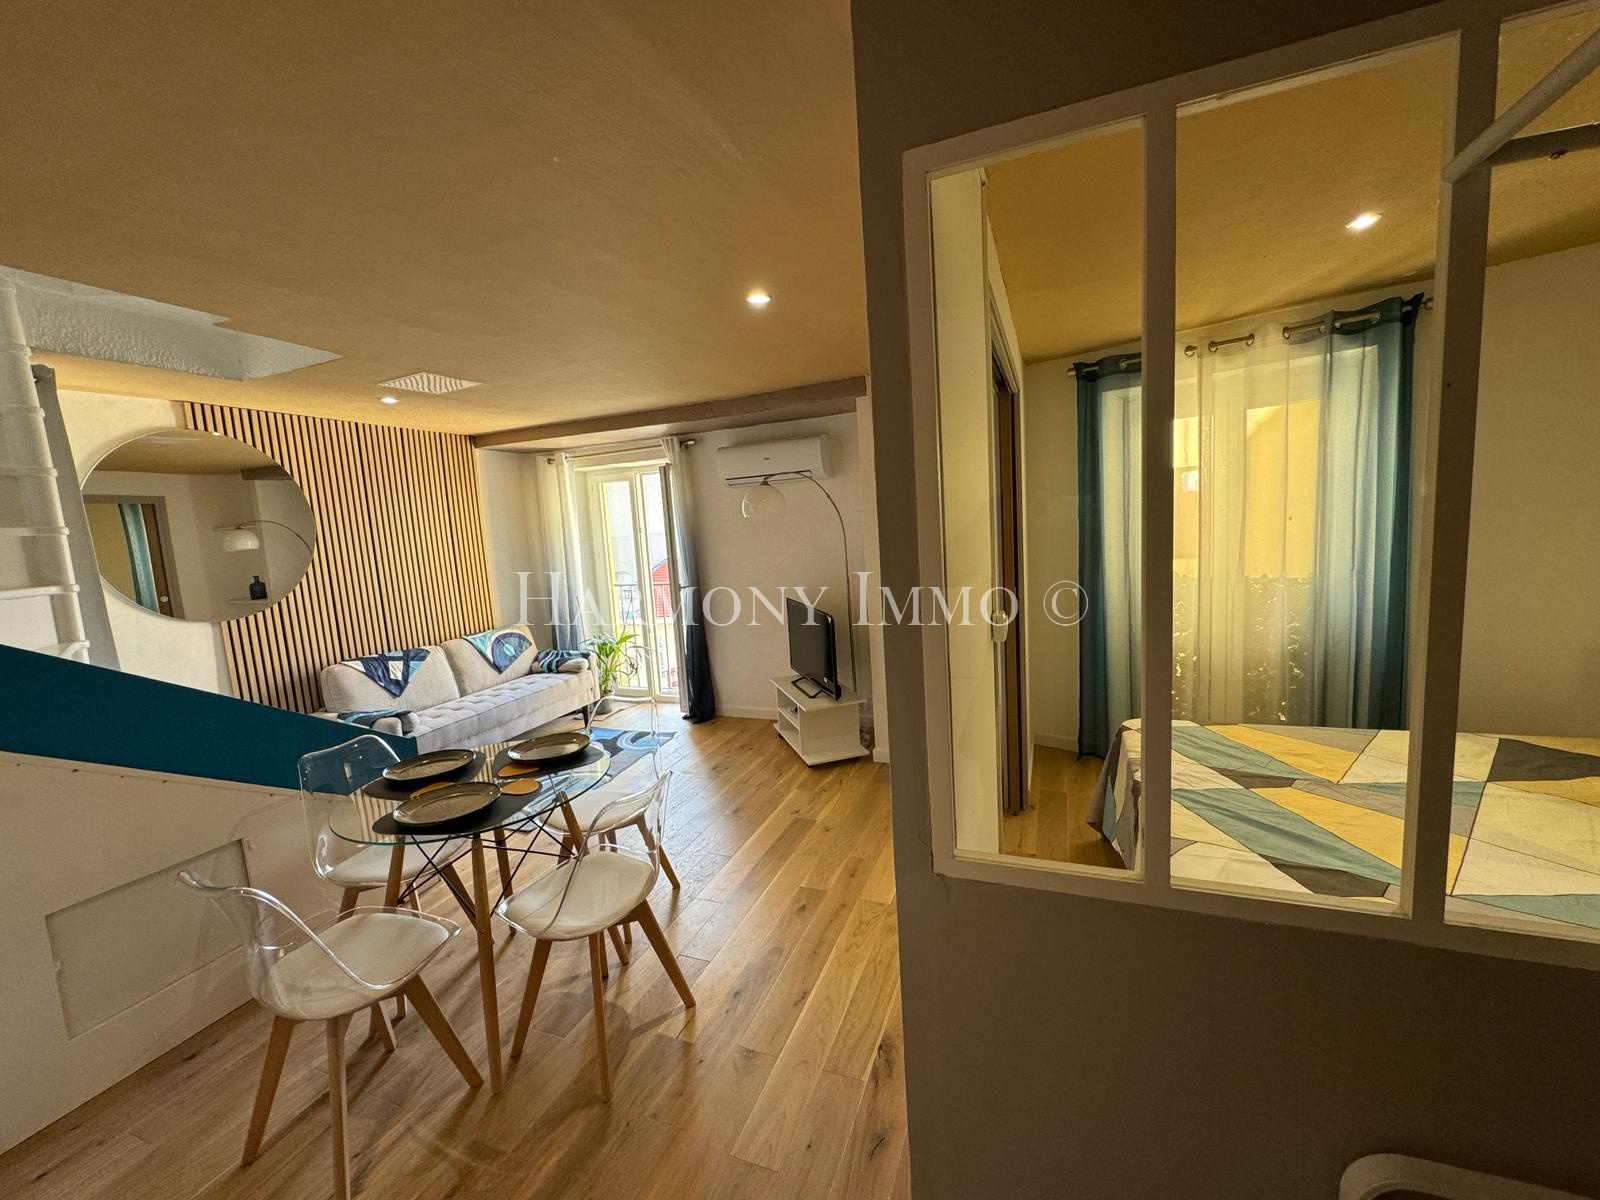 Vente Appartement 50m² 3 Pièces à Nice (06000) - Harmony Immo